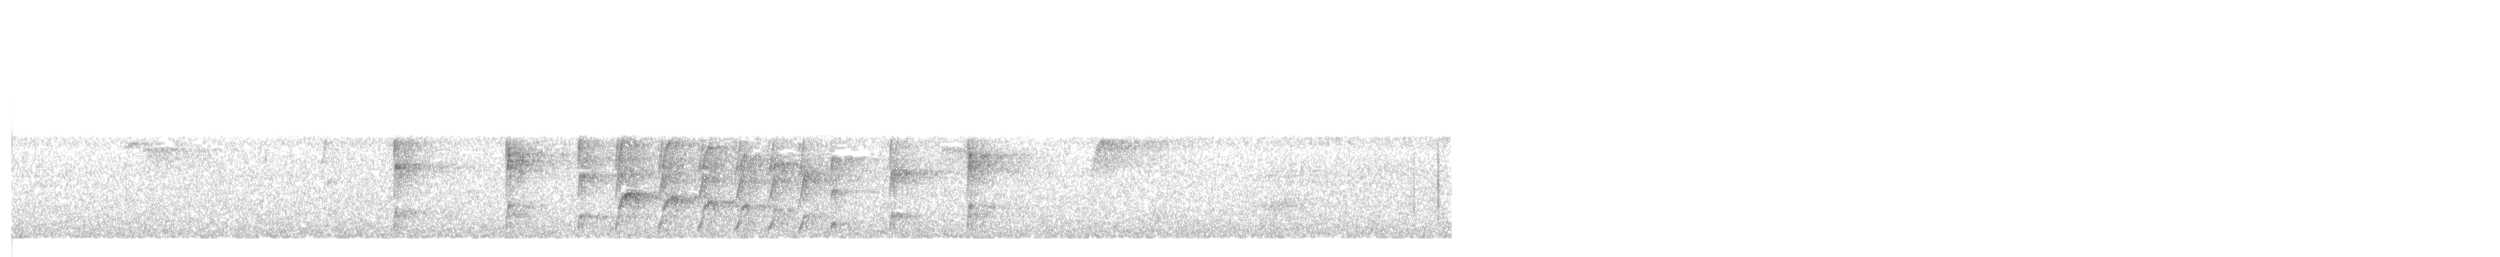 Todirostre noir et blanc - ML62138001